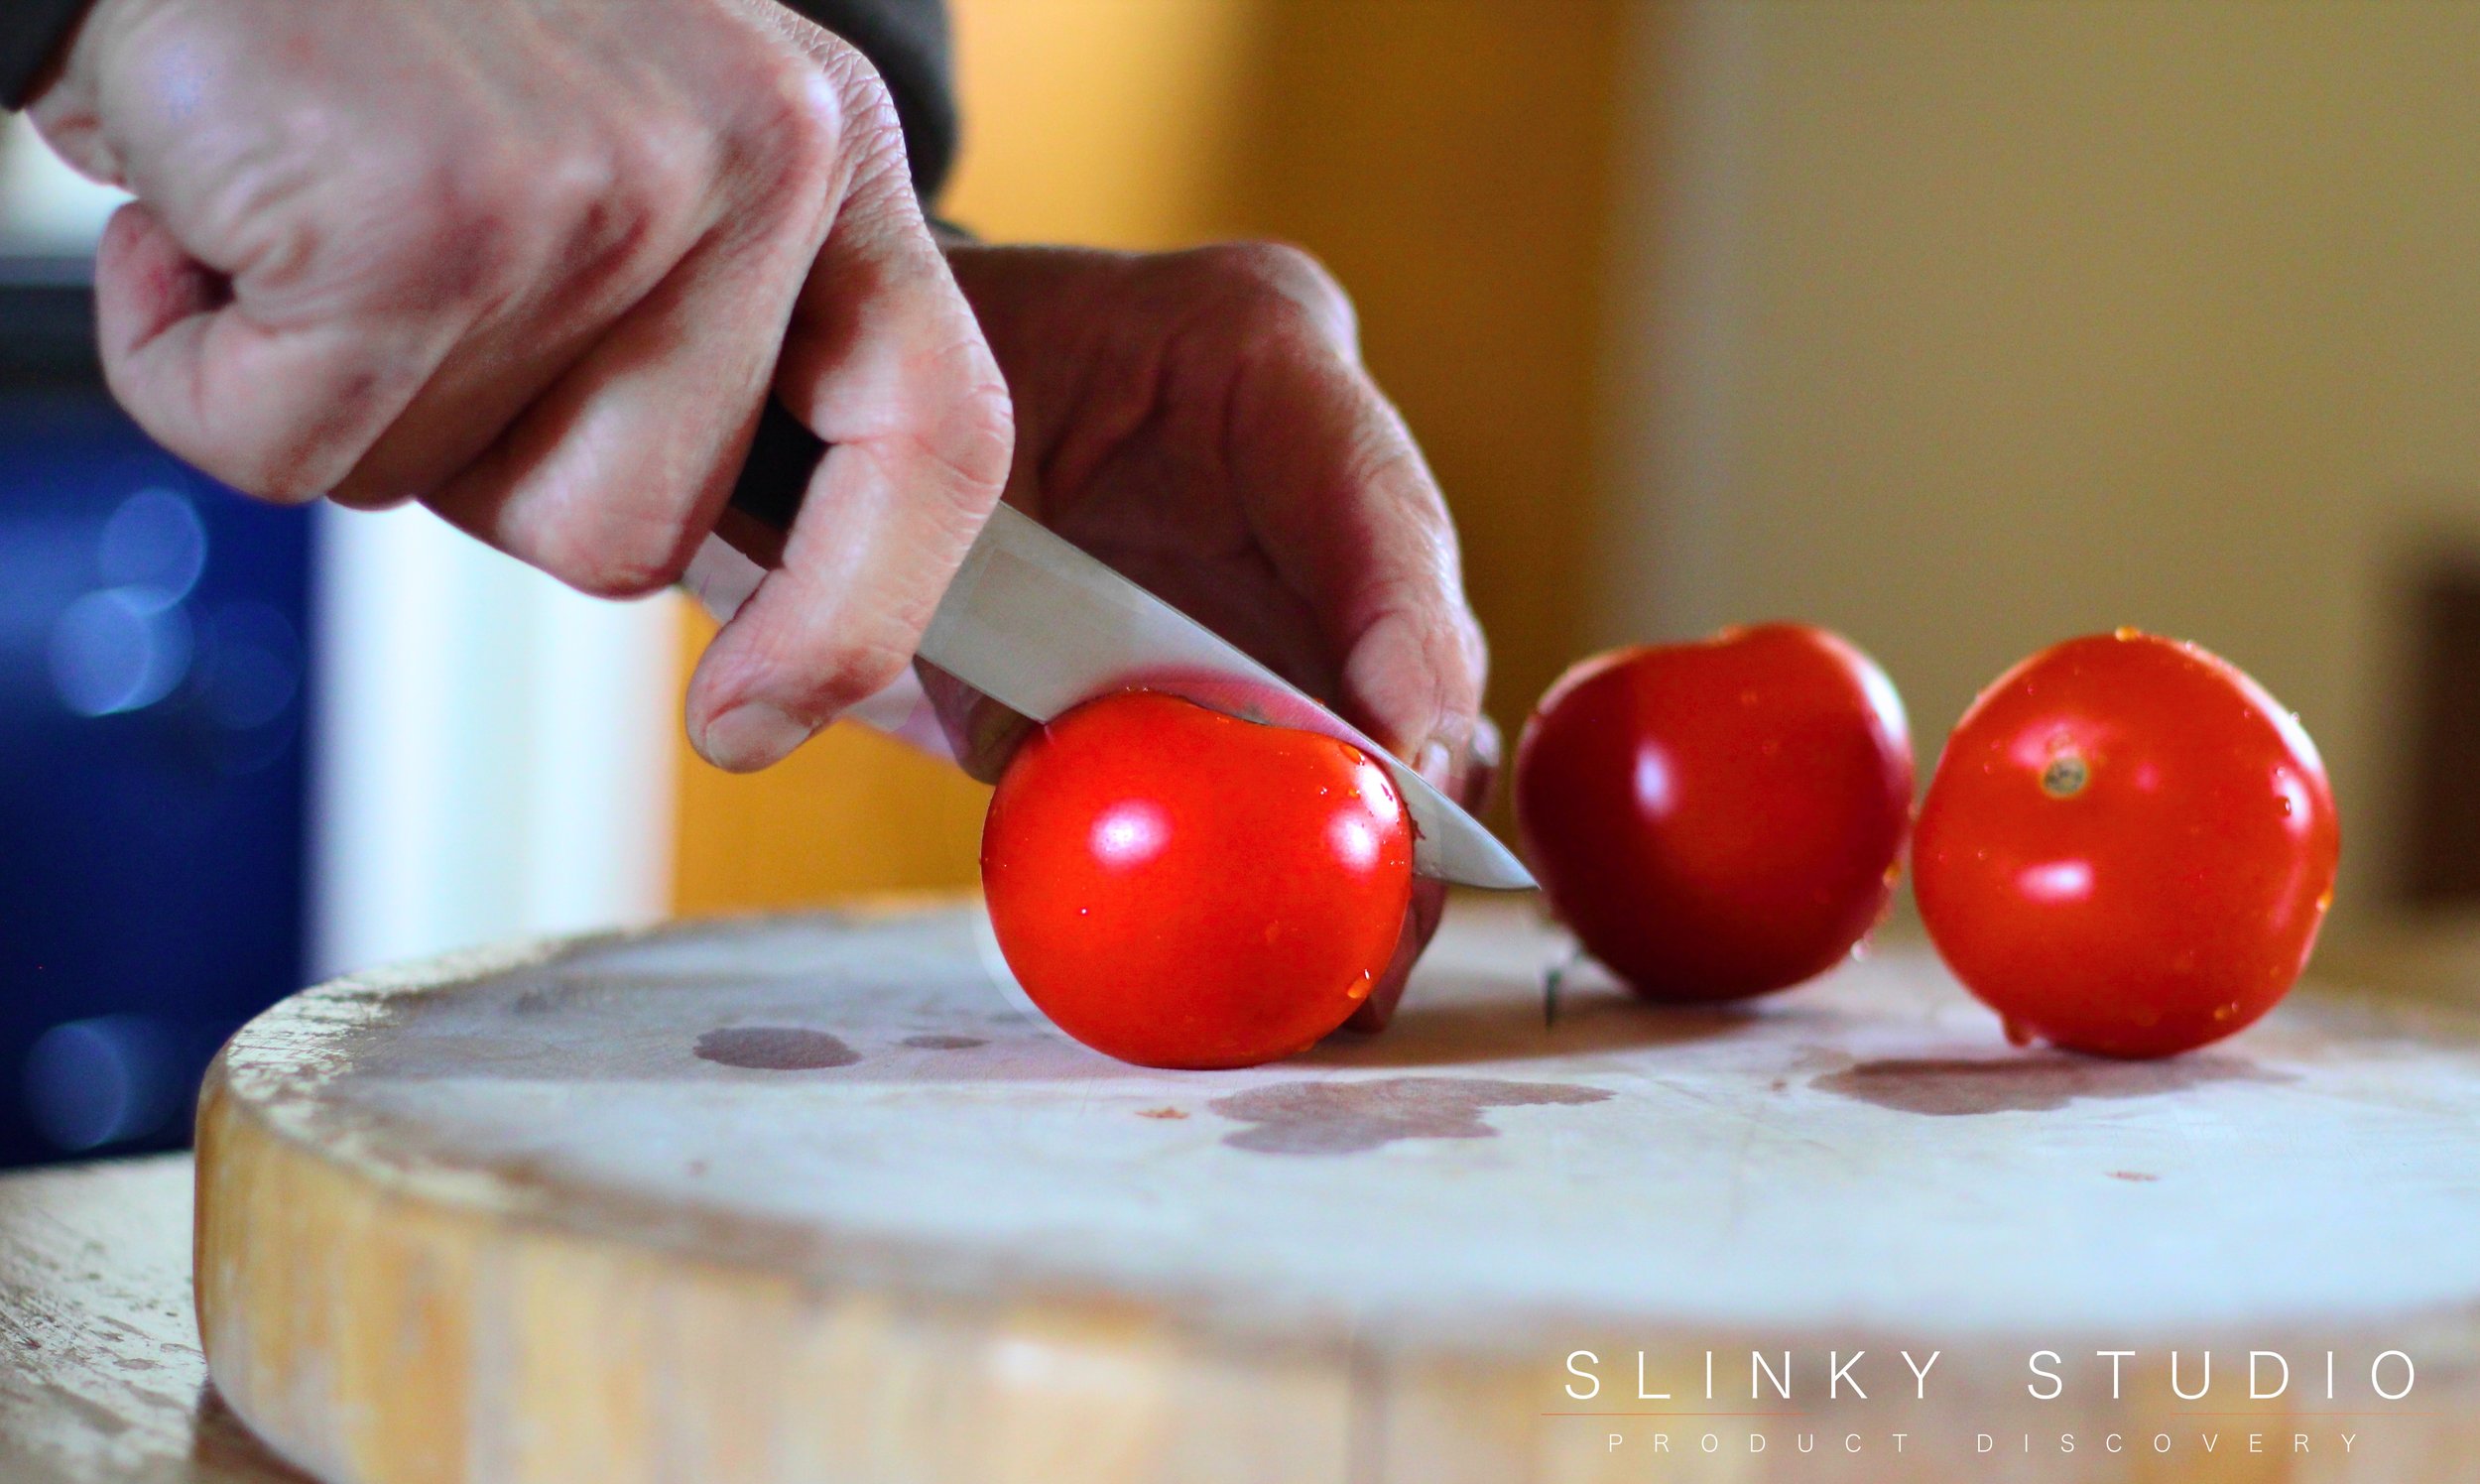 KitchenAid 7pc Professional Series Knife Set Pairing Knife Slicing Tomatoes.jpg